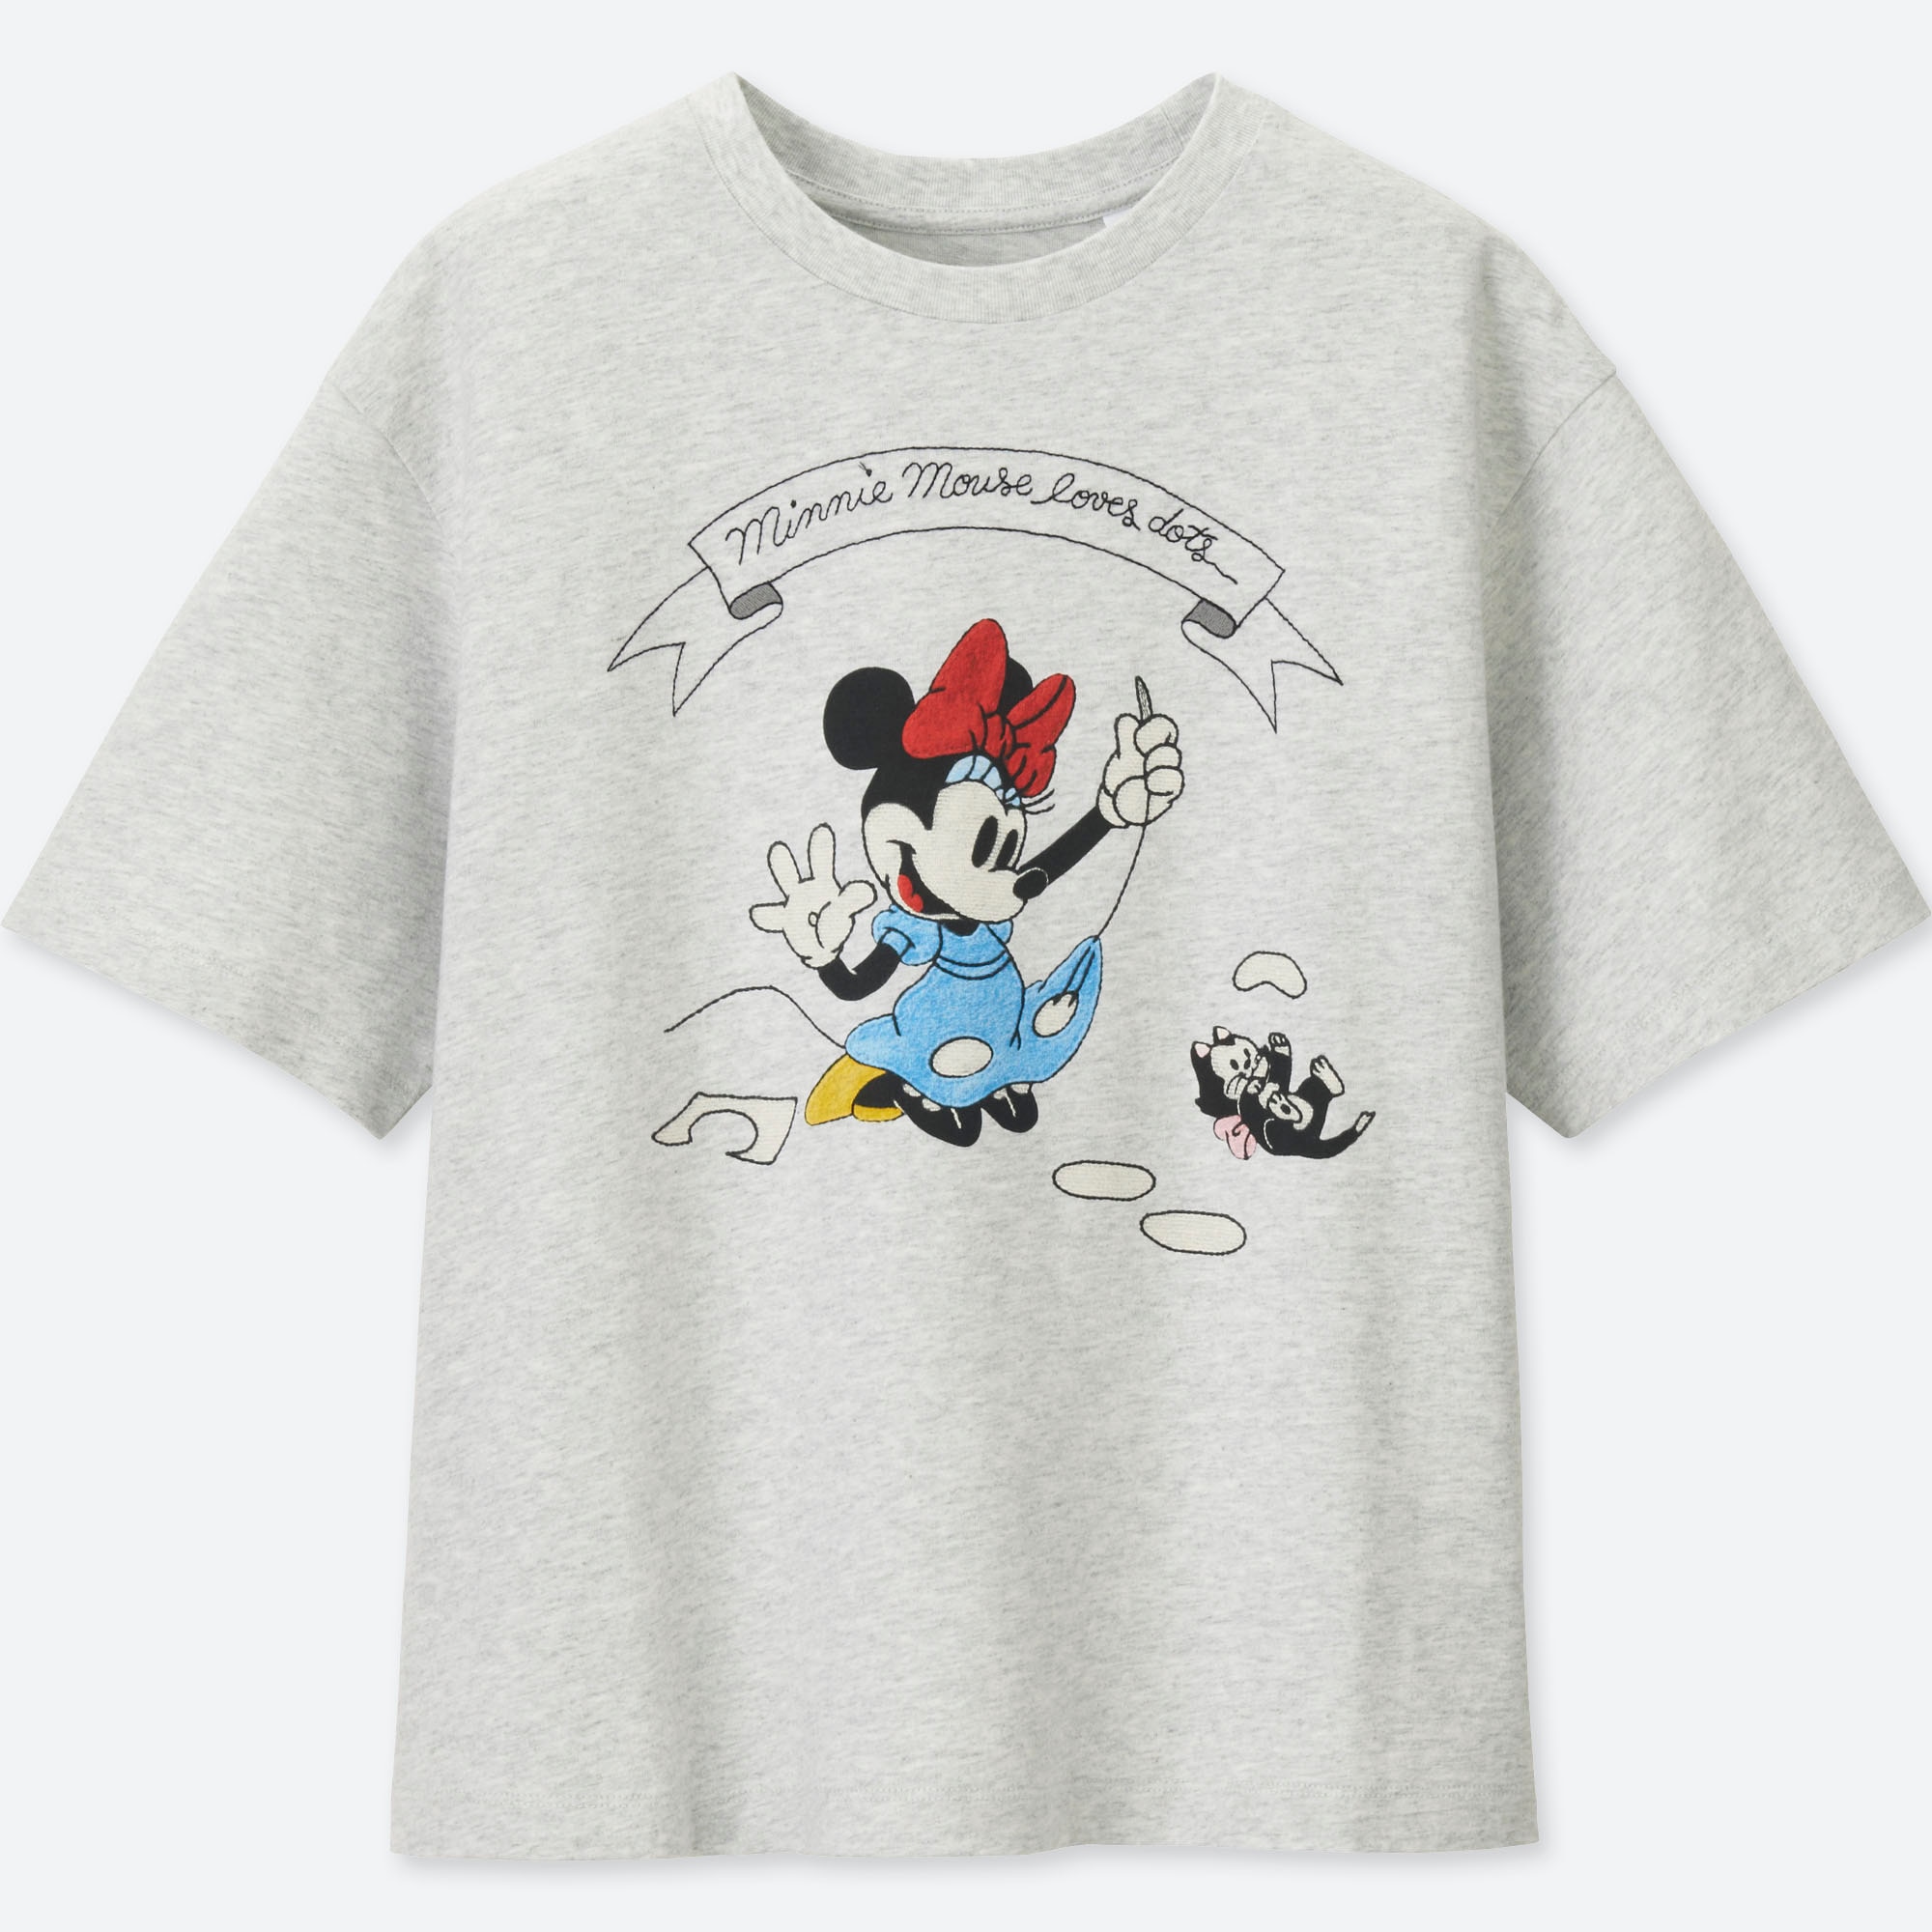 NEU Disney Minnie Mouse Langarmshirt Shirt Longsleeve Pulli lila 98 104 116 128 